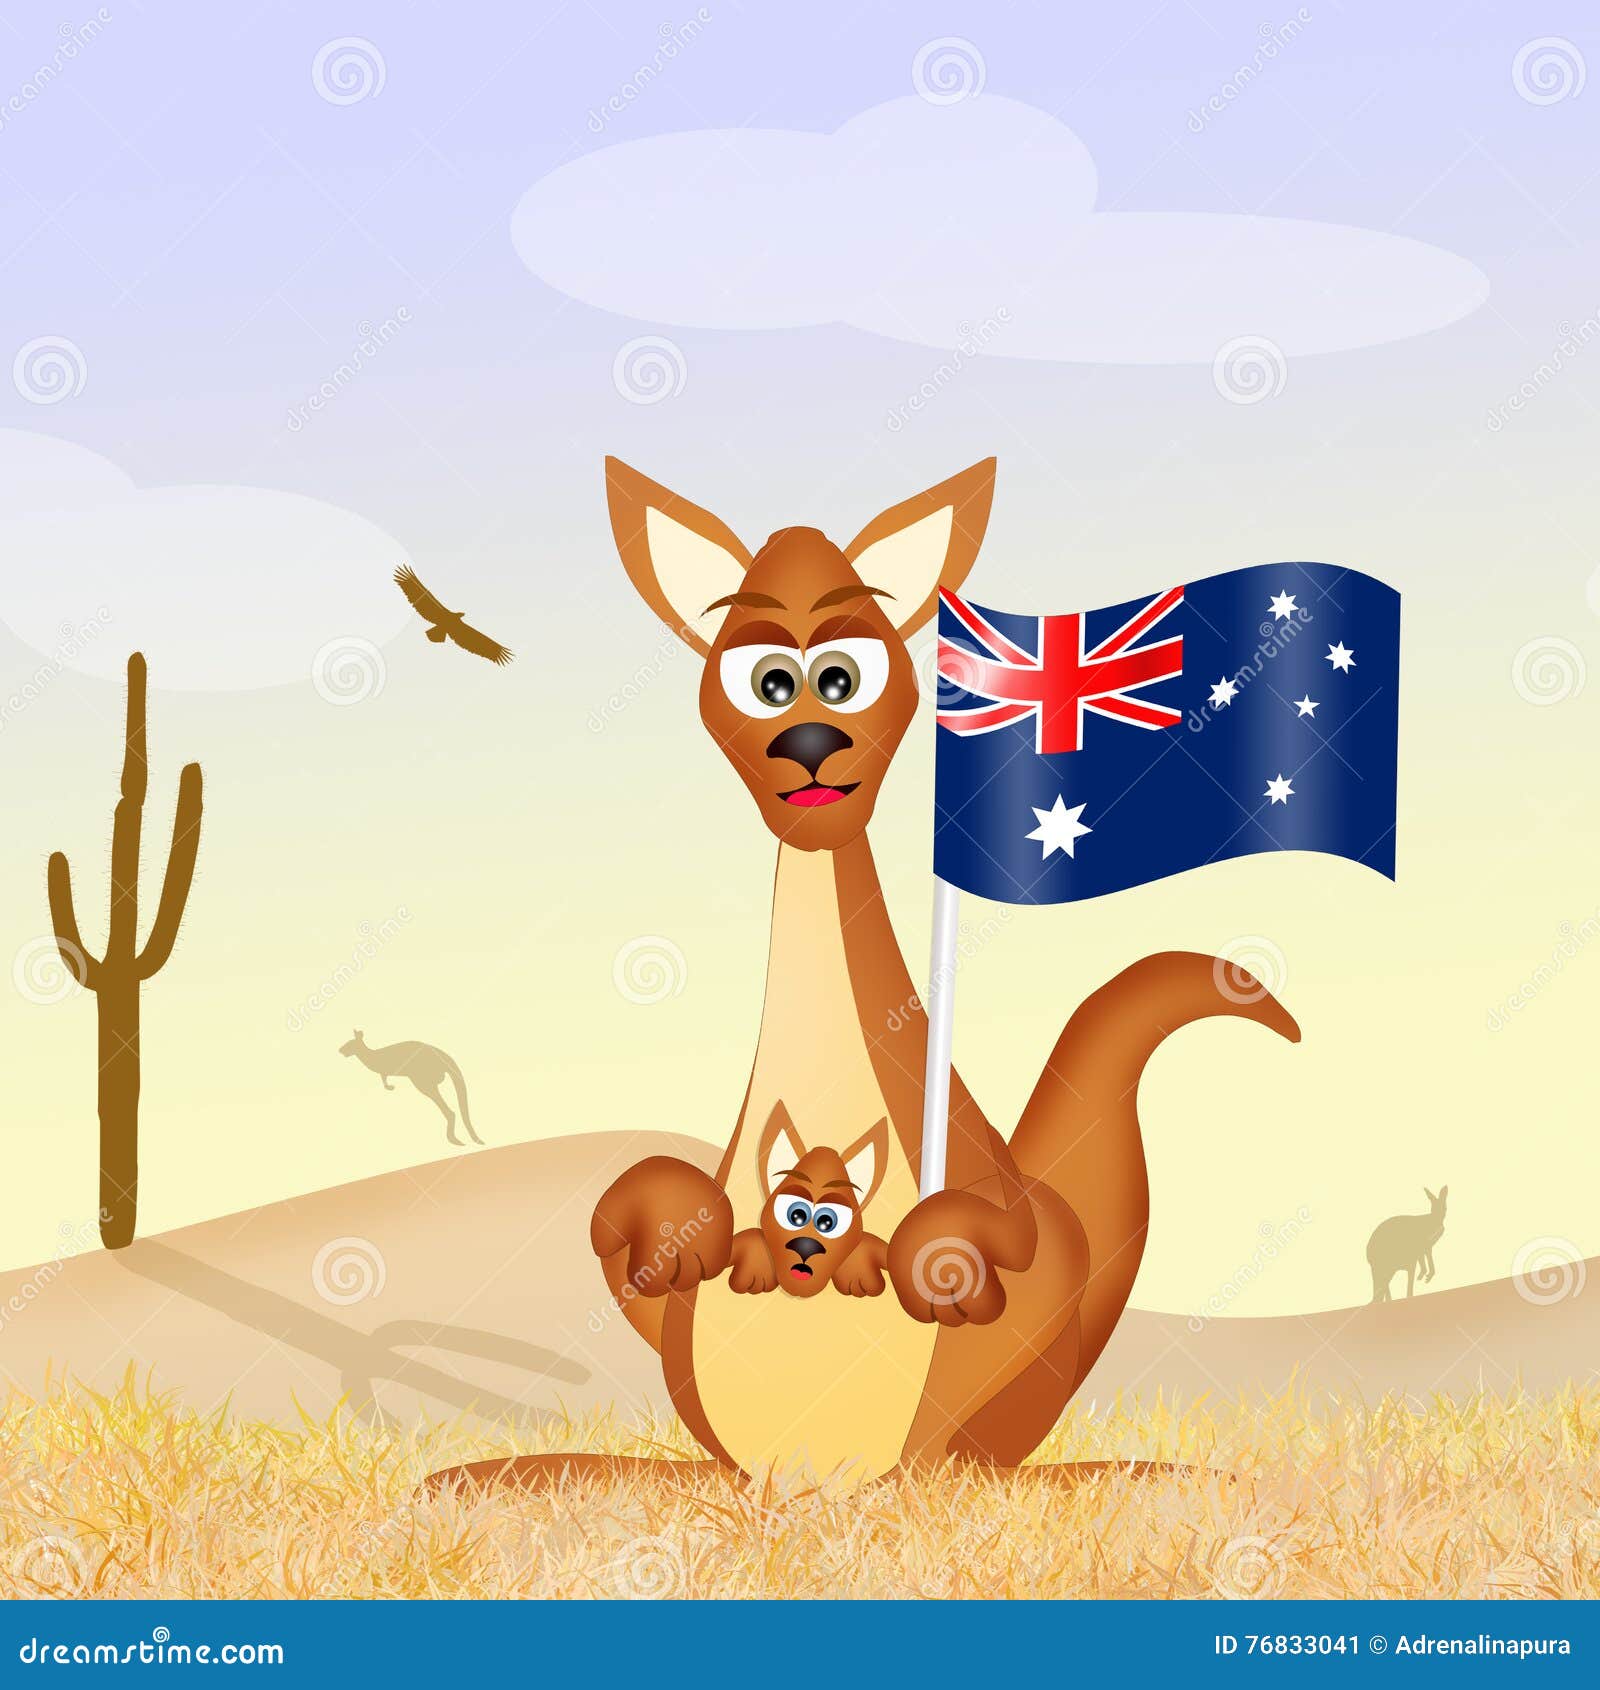 Funny kangaroo stock illustration. Illustration of marsupial - 76833041